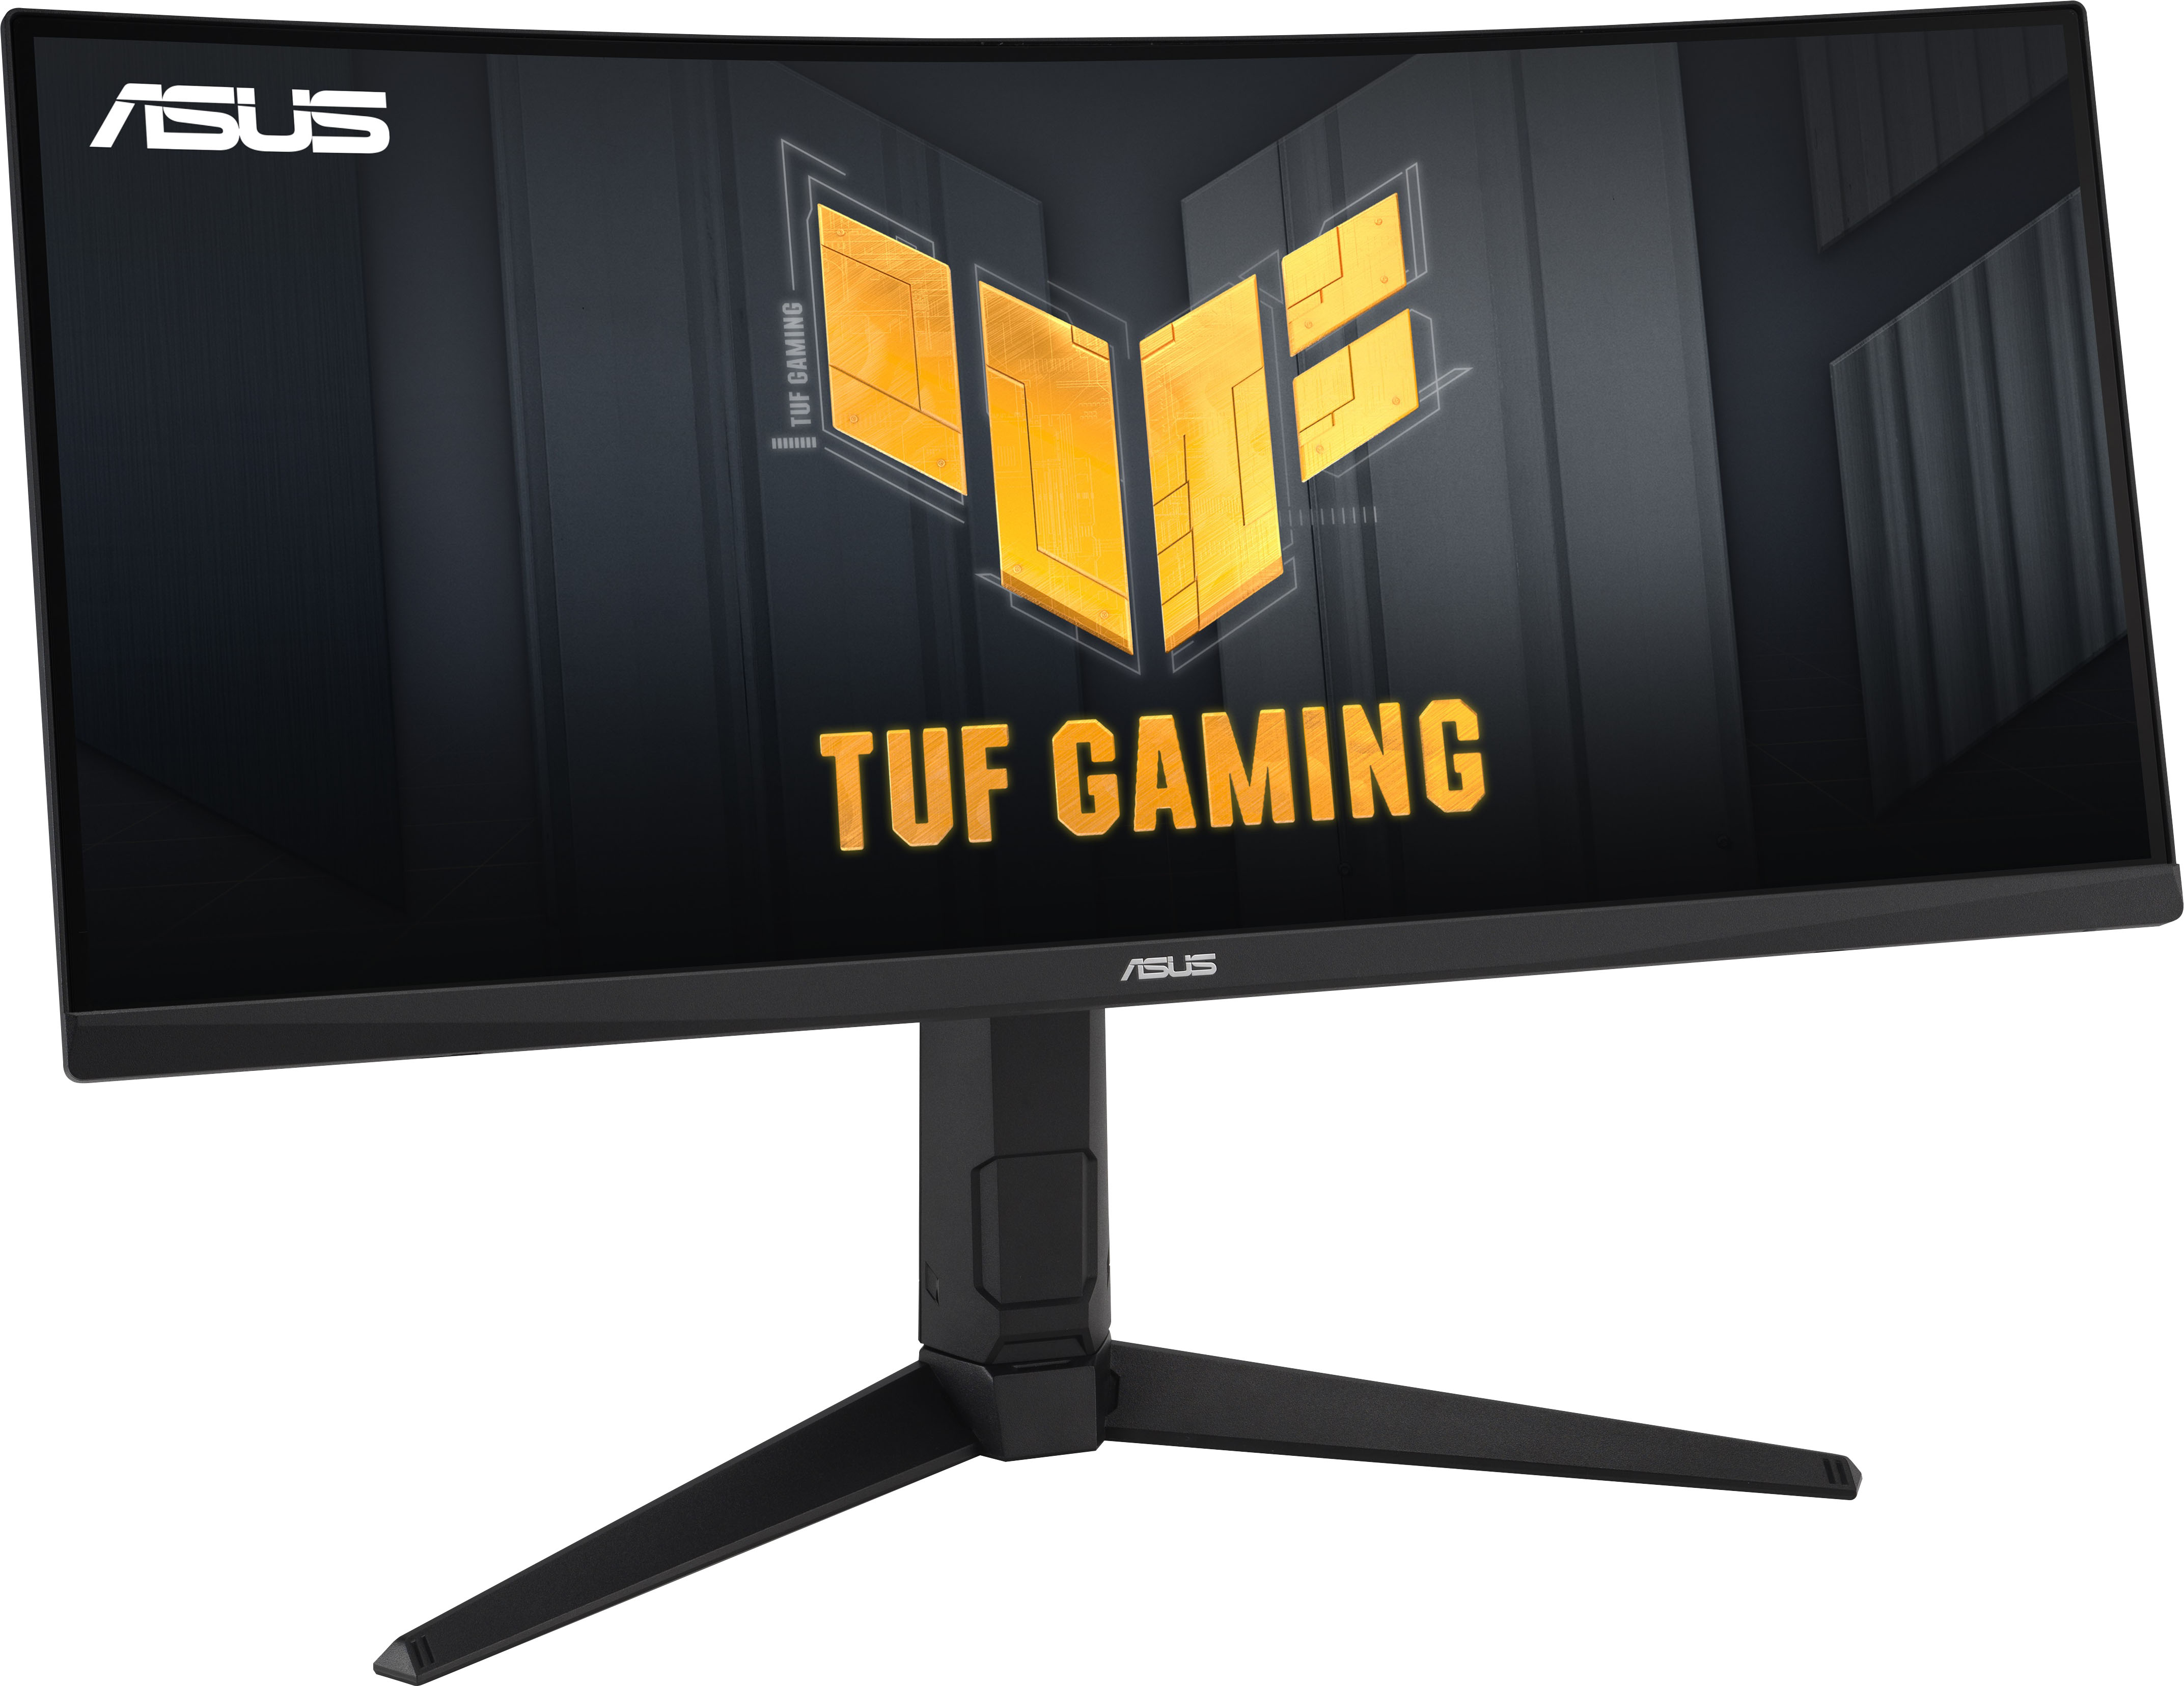 Angle View: ASUS - TUF Gaming 24" LCD Curved FreeSync Monitor (DisplayPort, HDMI) - Black